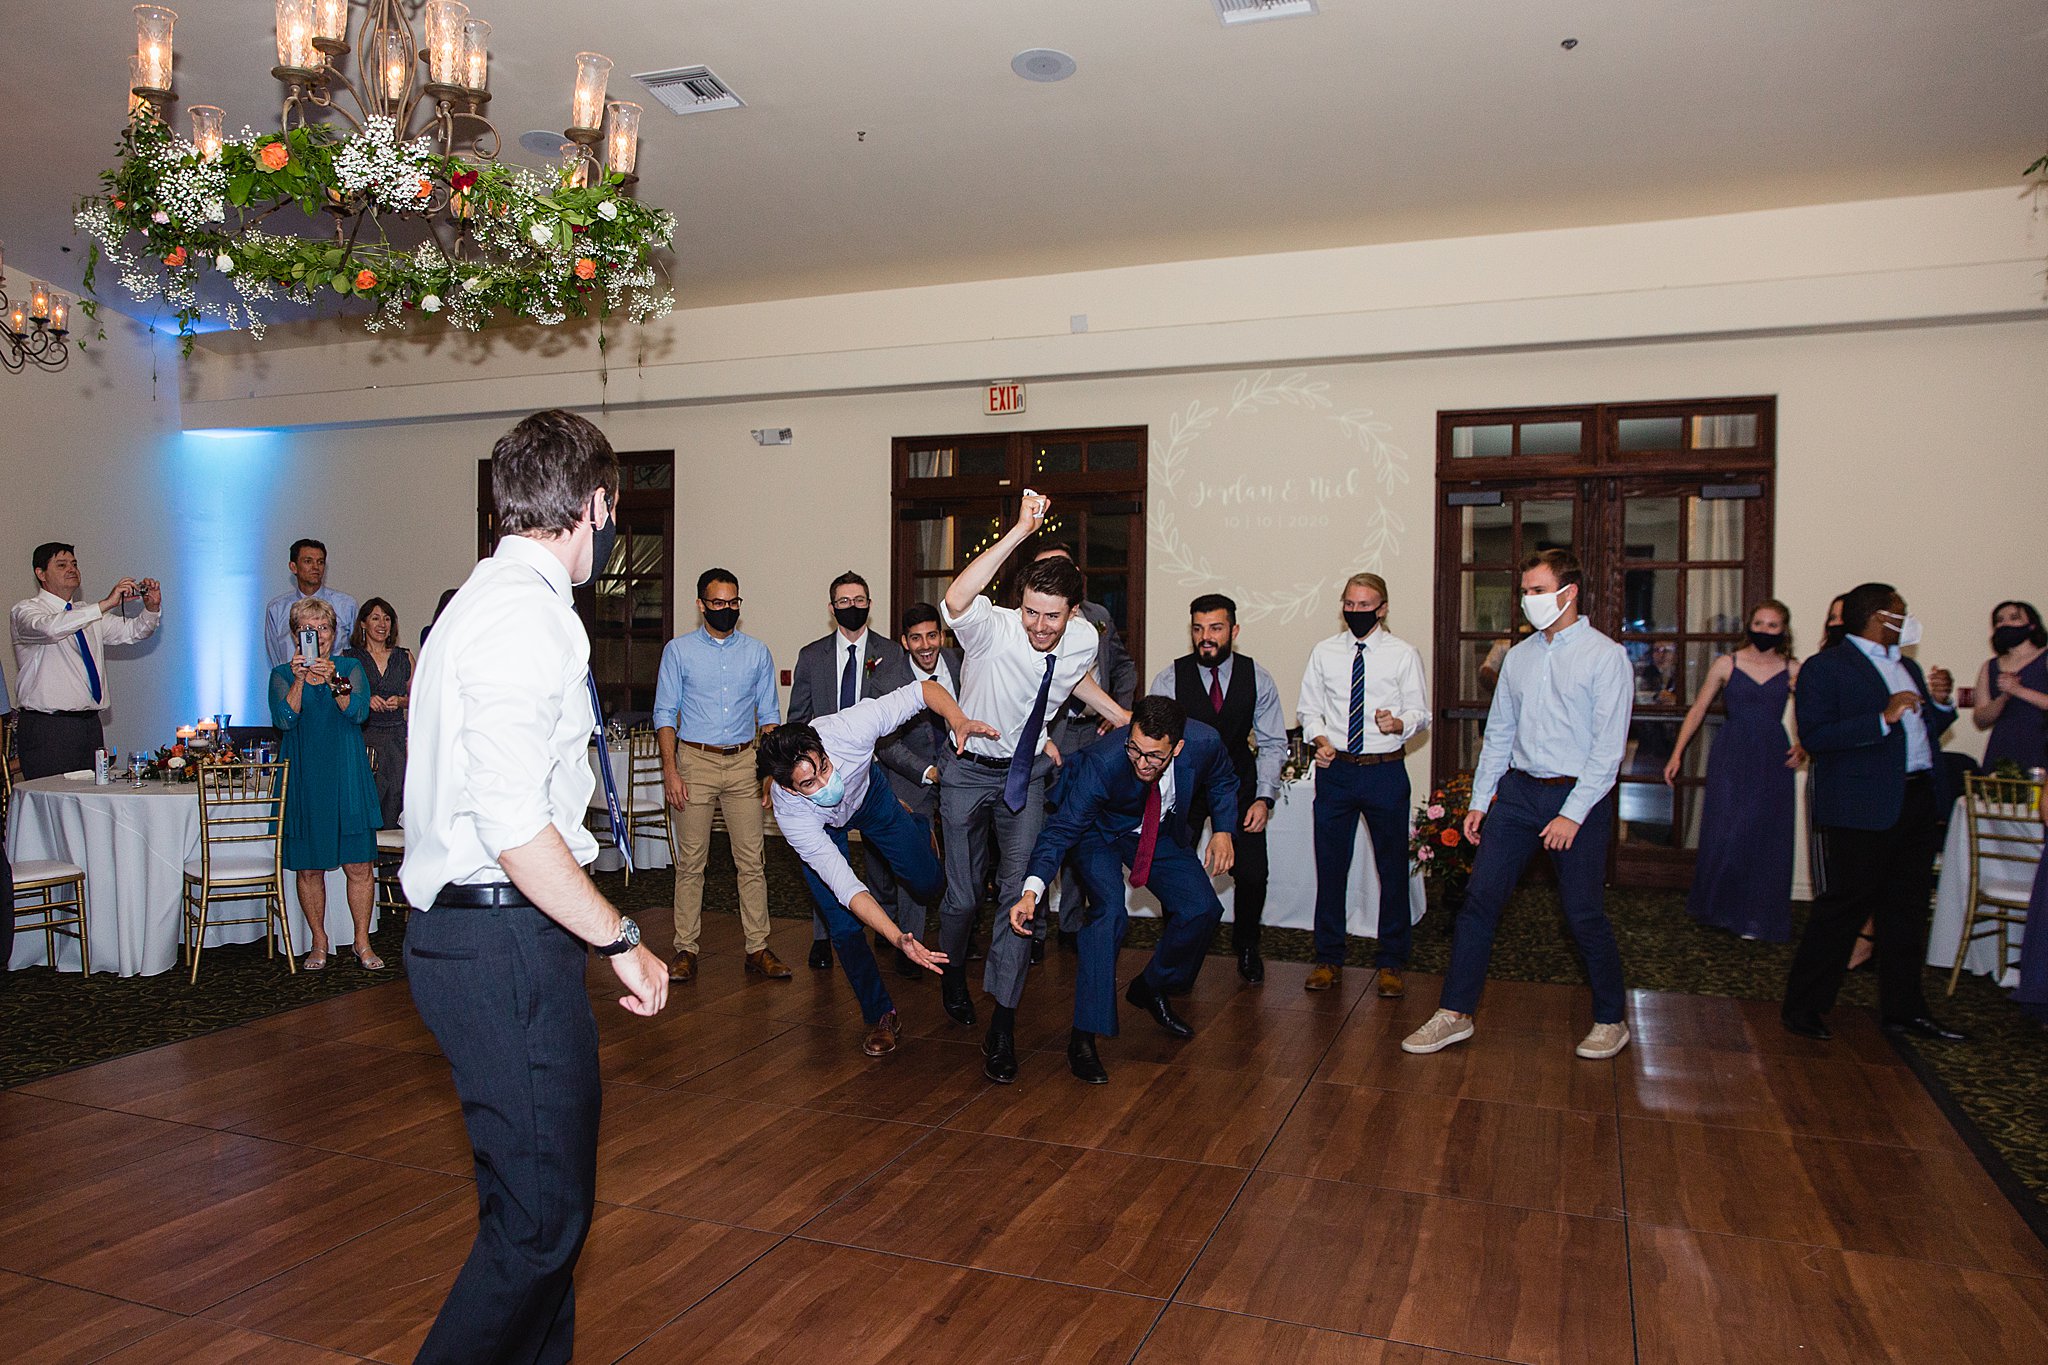 Garter toss at Secret Garden Events wedding reception by Phoenix wedding photographer PMA Photography.